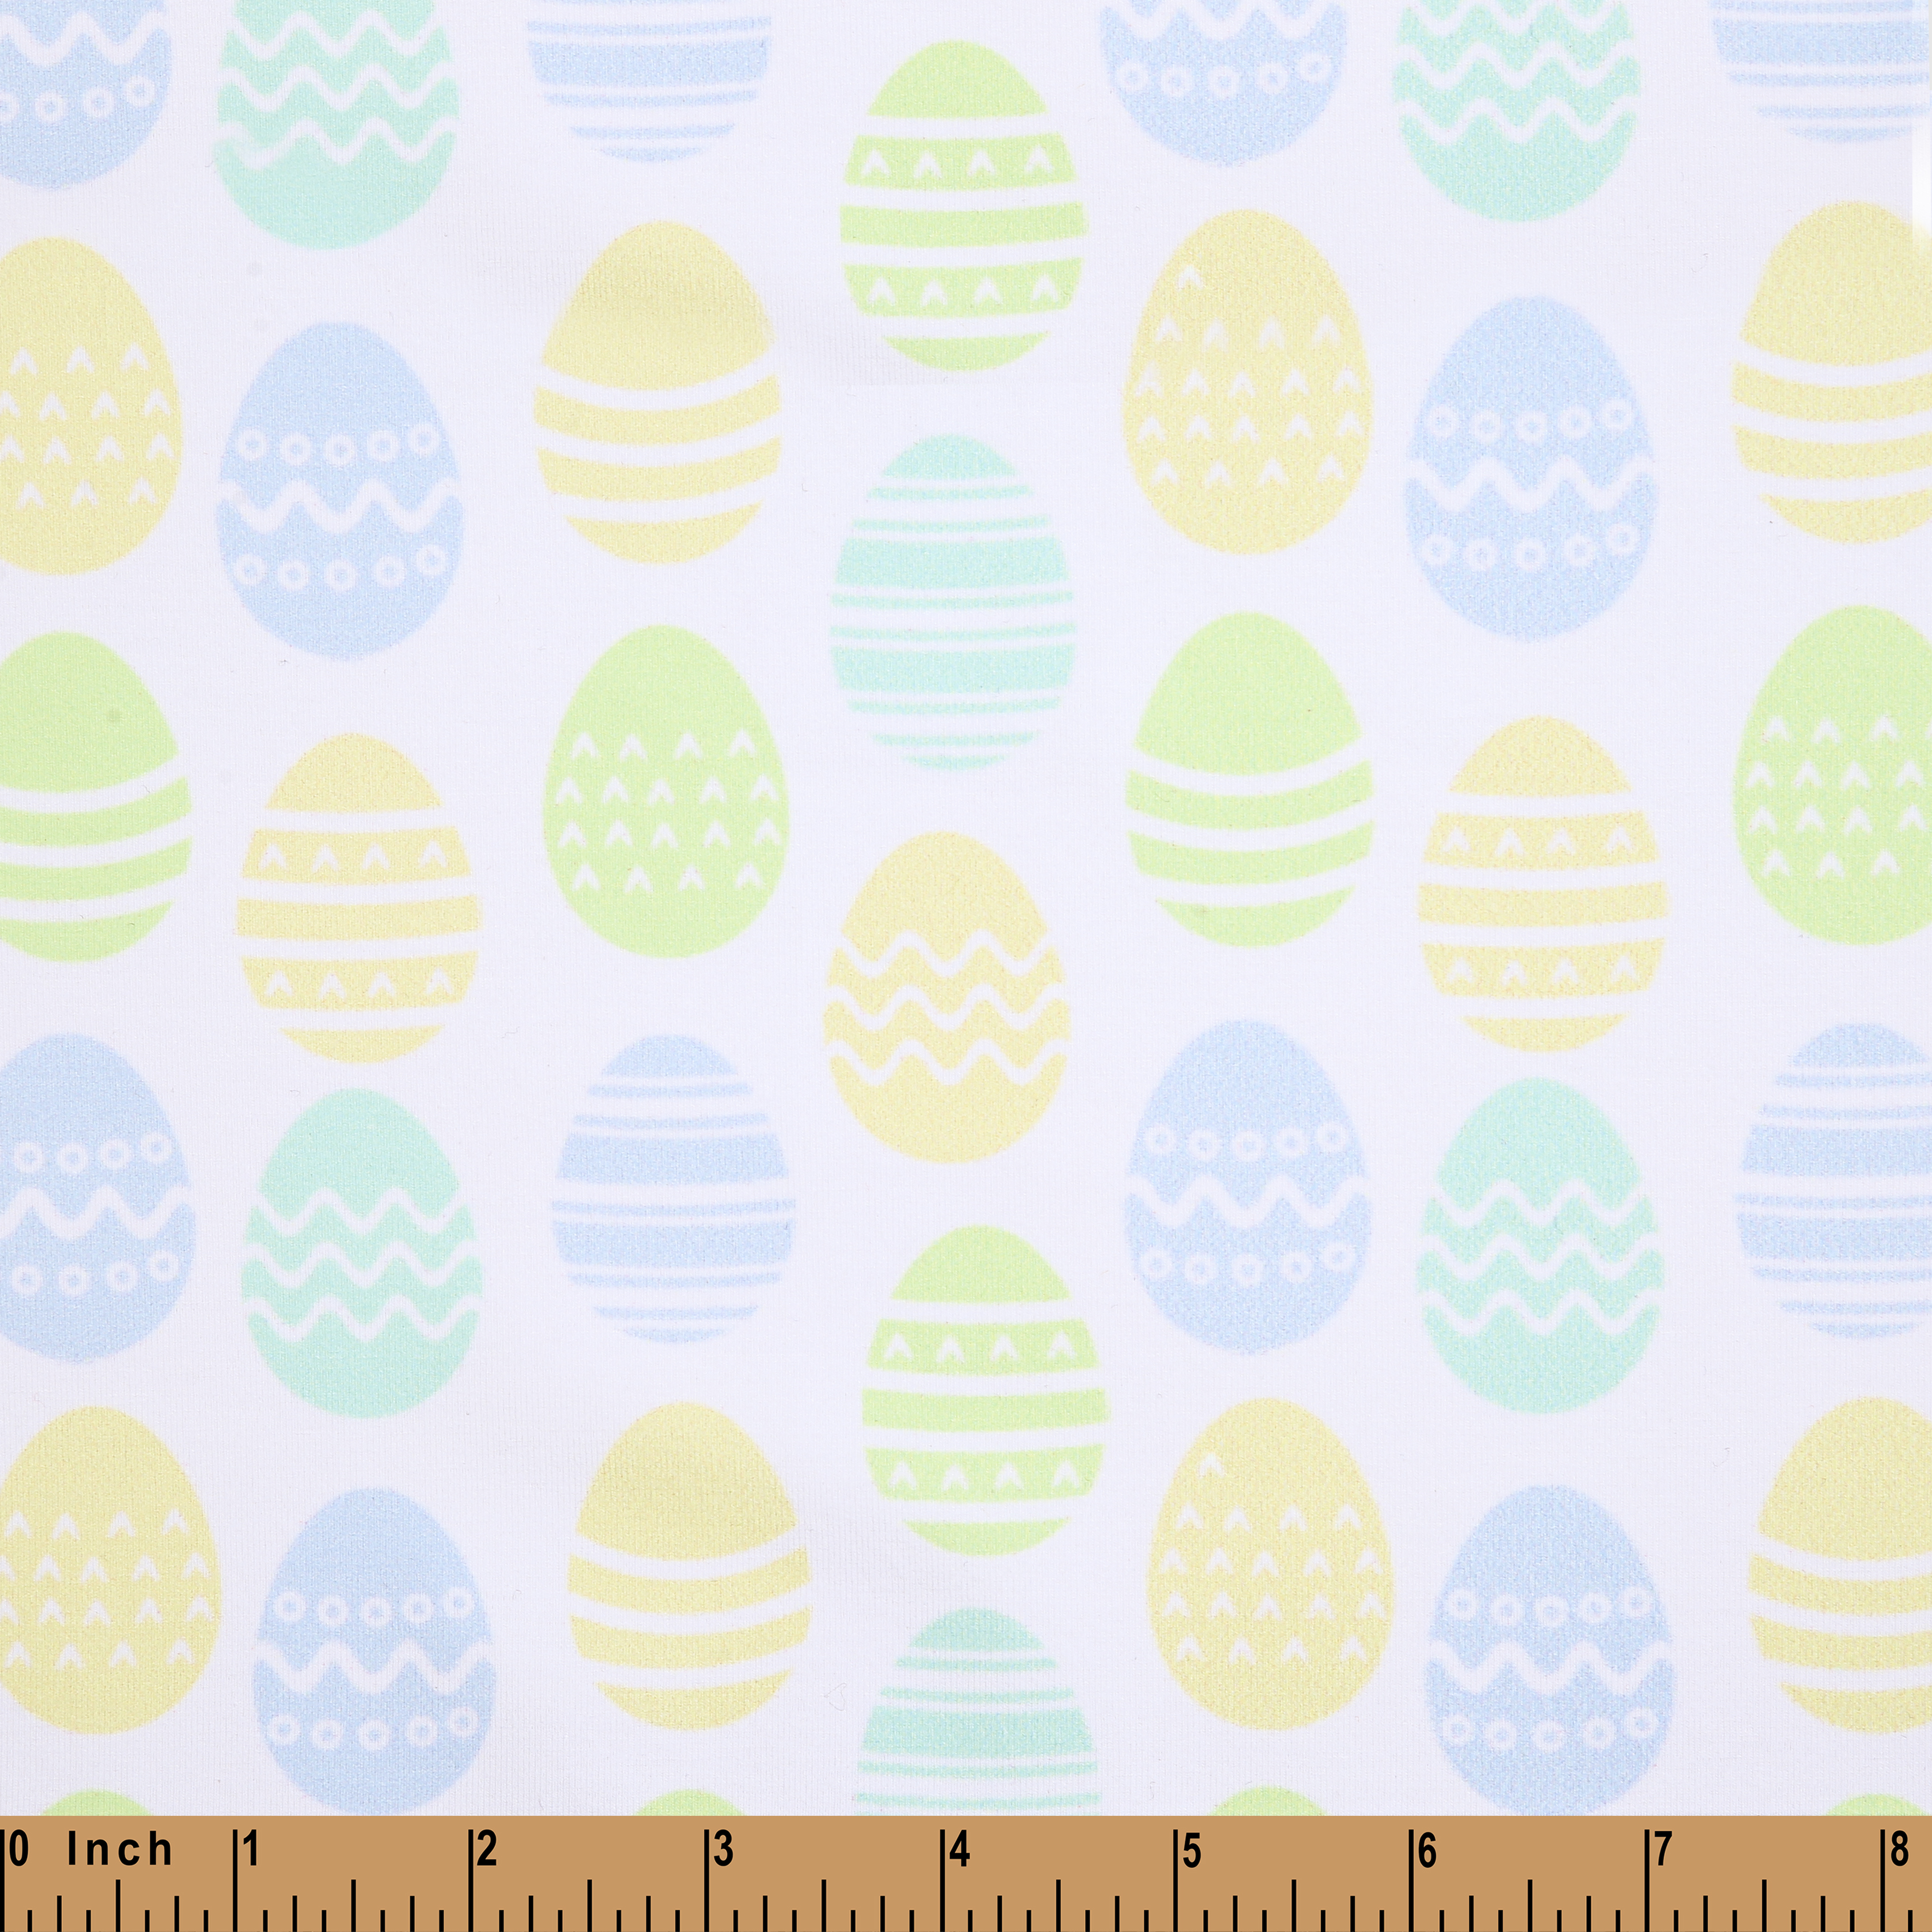 CD32- Easters eggs thin cardigan printing 4.0 fabric